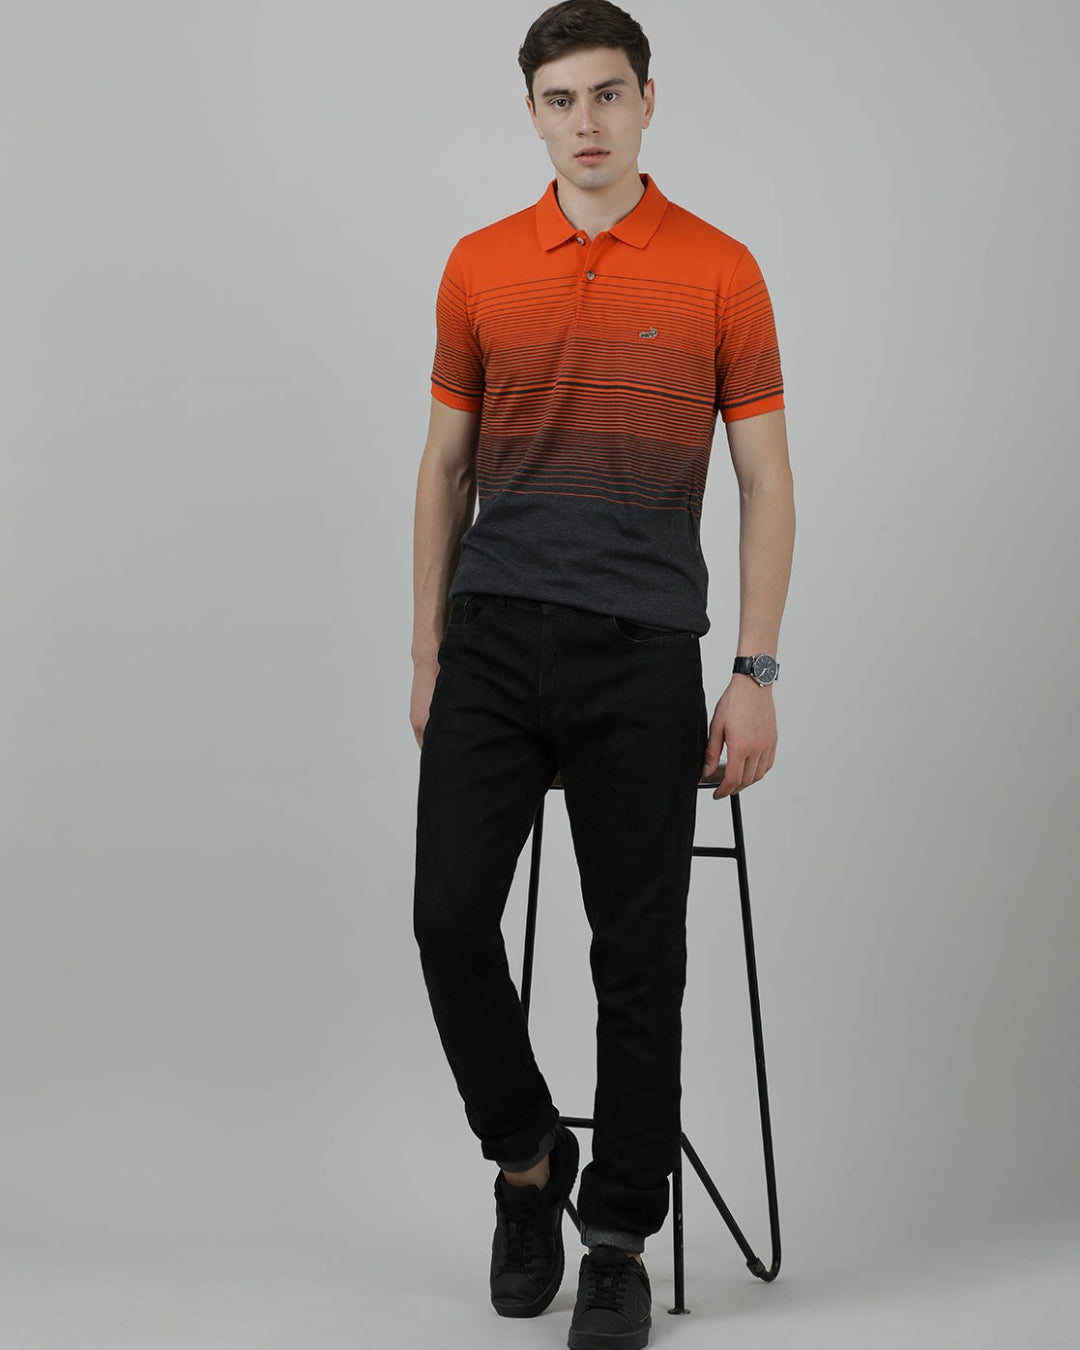 Crocodile Casual Orange T-Shirt Half Sleeve Slim Fit Jersey Engineering Stripe with Collar for Men